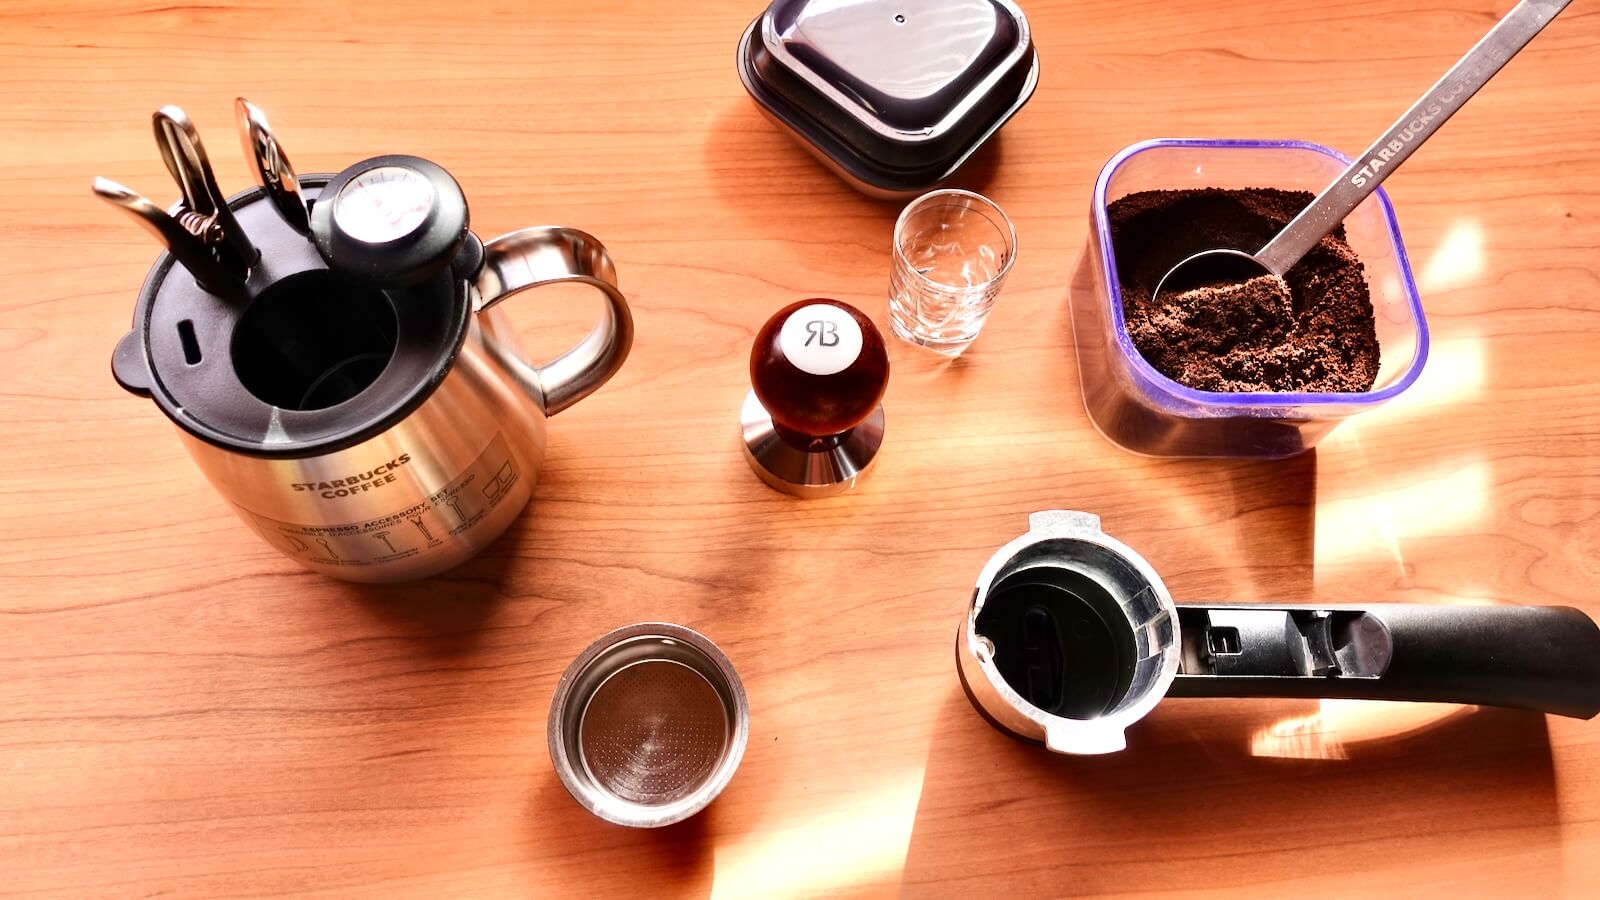 Starbucks Espresso Accessory Kit and Filter Holder